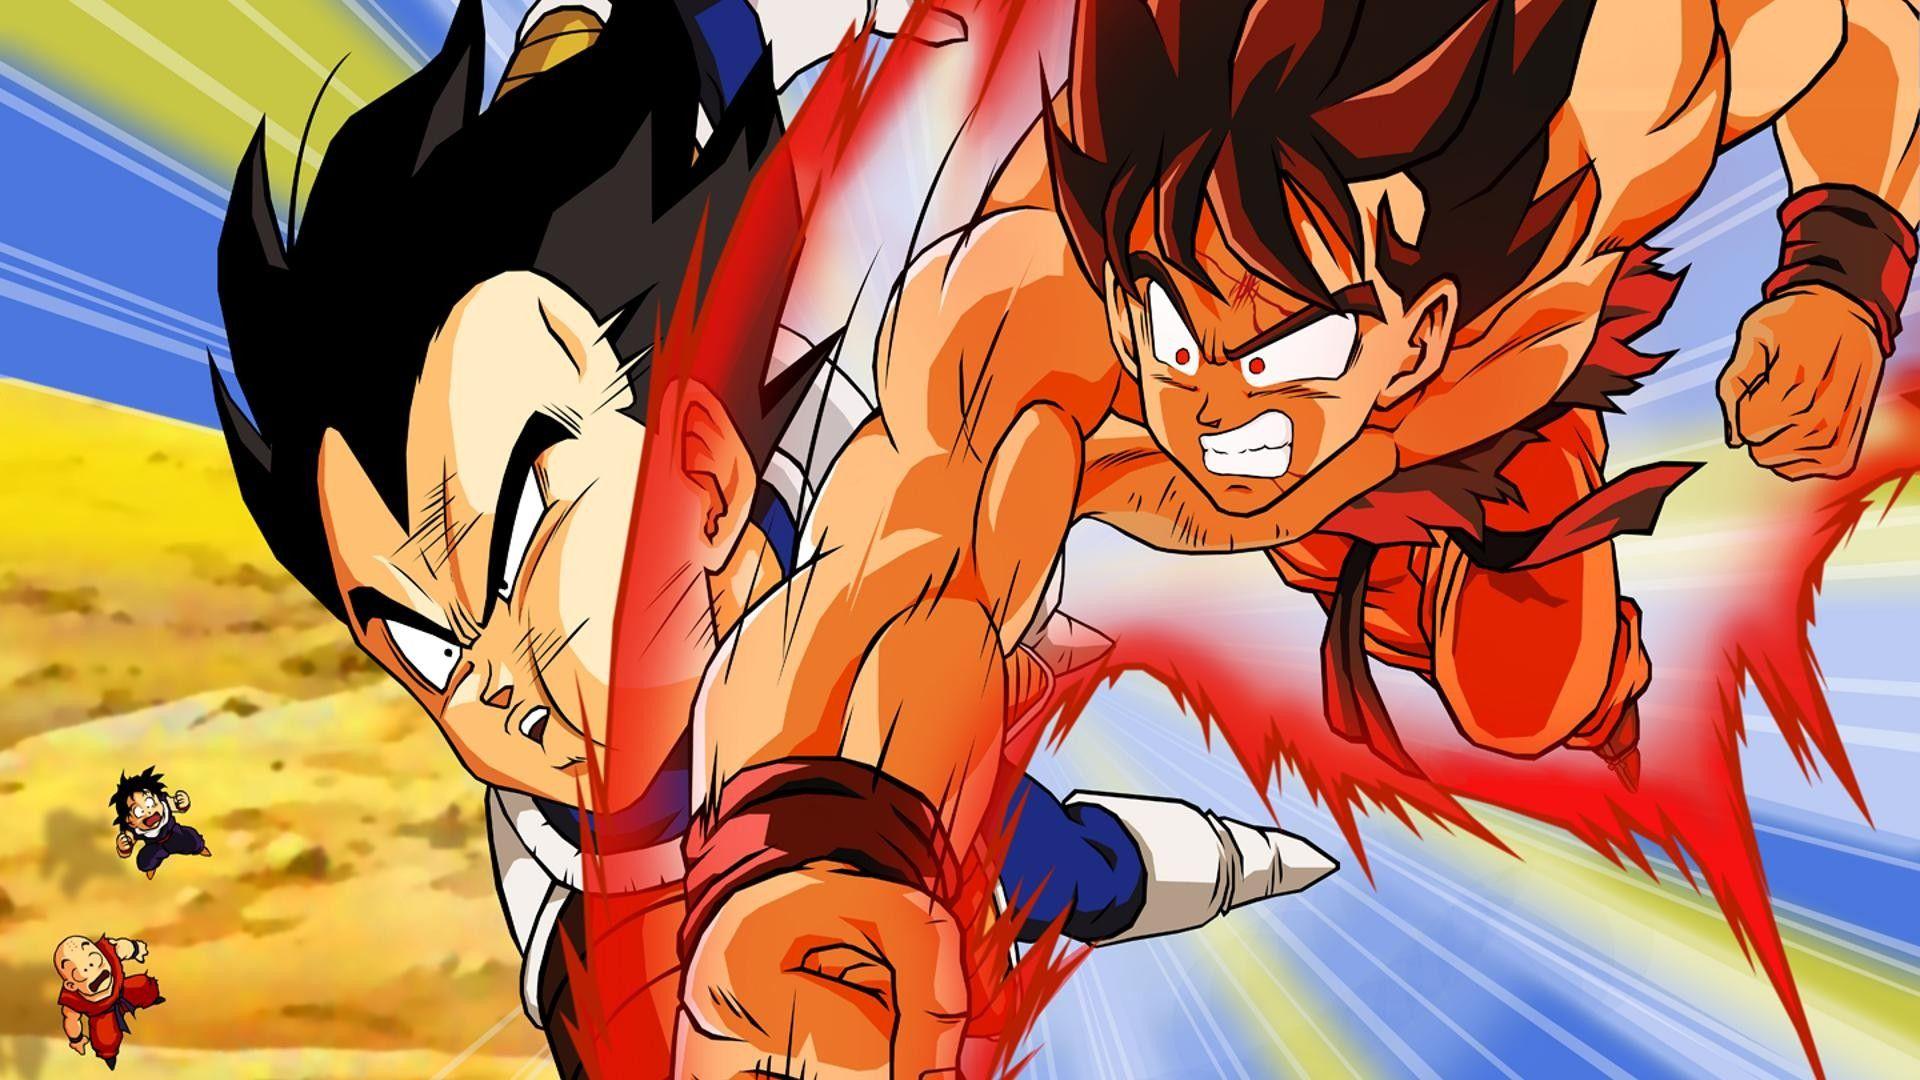 Goku Vs Vegeta by eggmanrules.deviantart.com on @DeviantArt | Dragon ball, Goku  vs, Dragon ball super manga